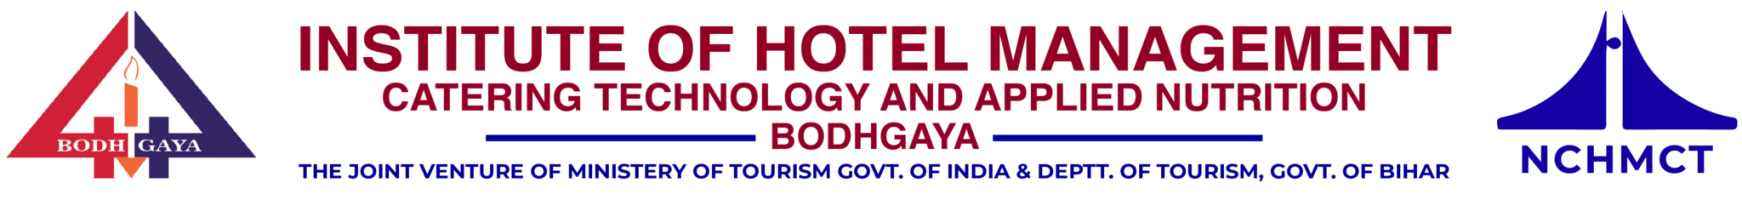 IHM Bodhgaya - Learning Management System